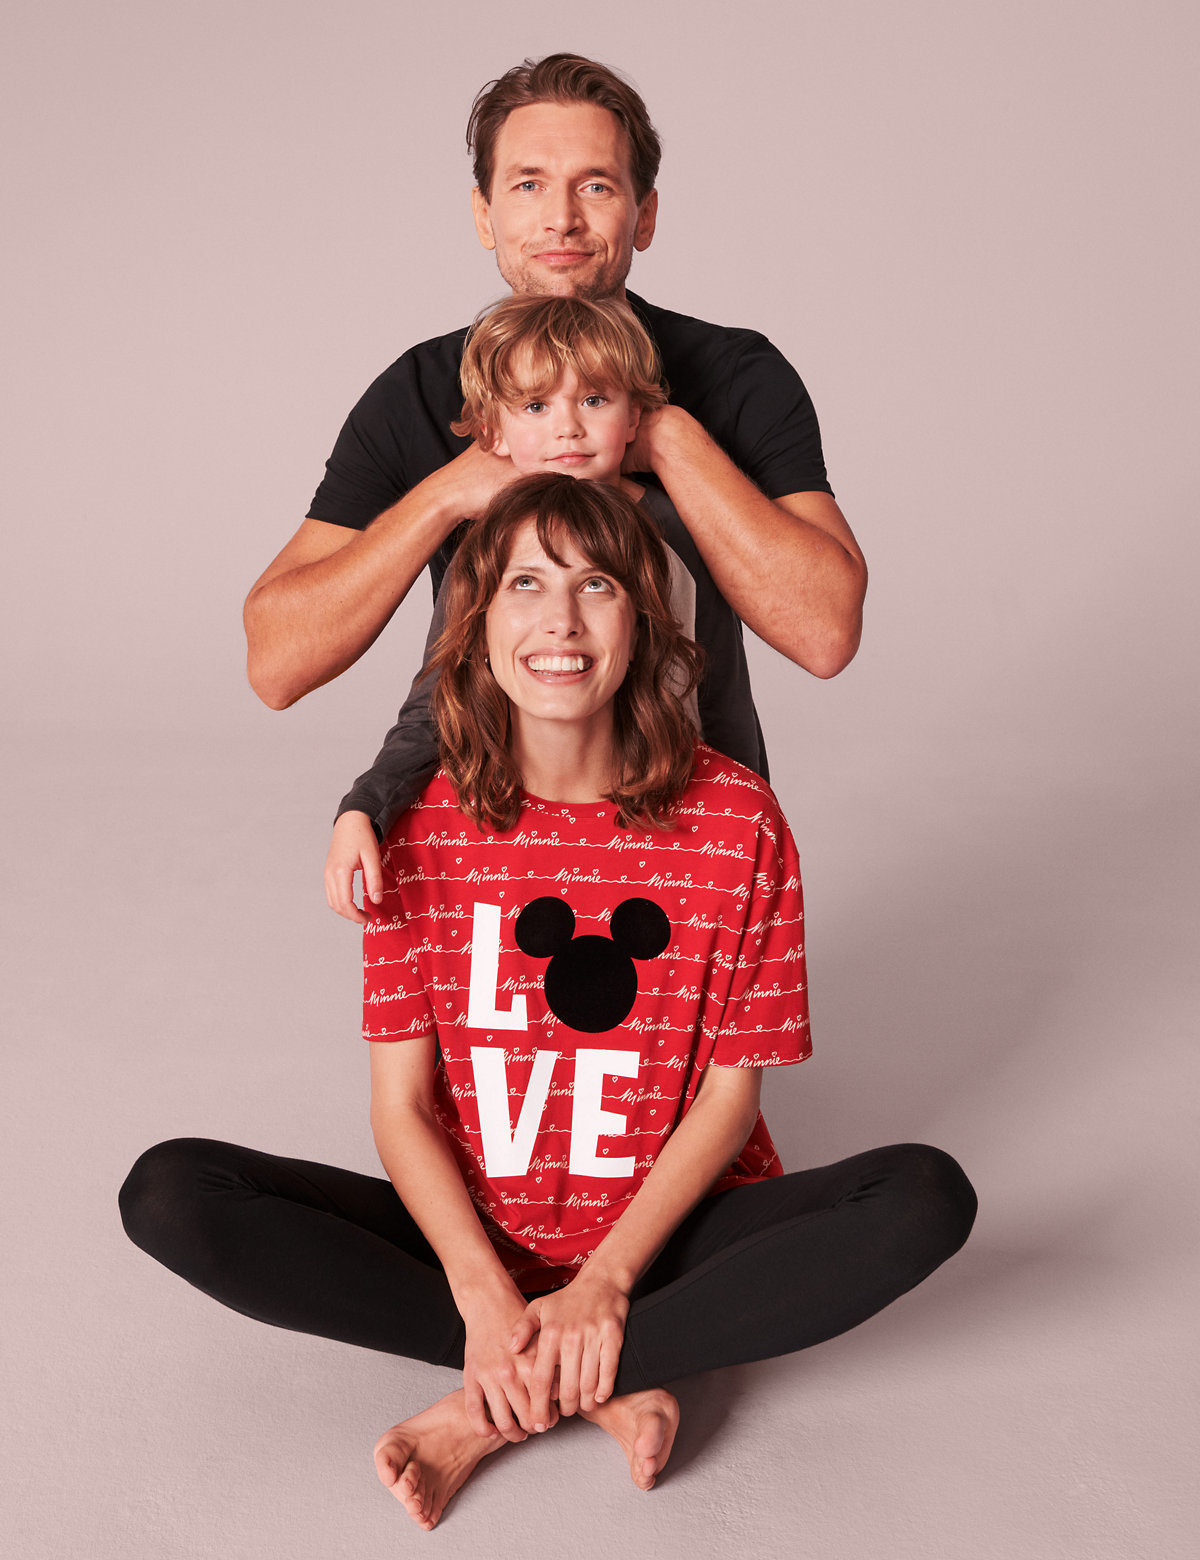 Mickey Mouse™ Cotton Pyjama Set